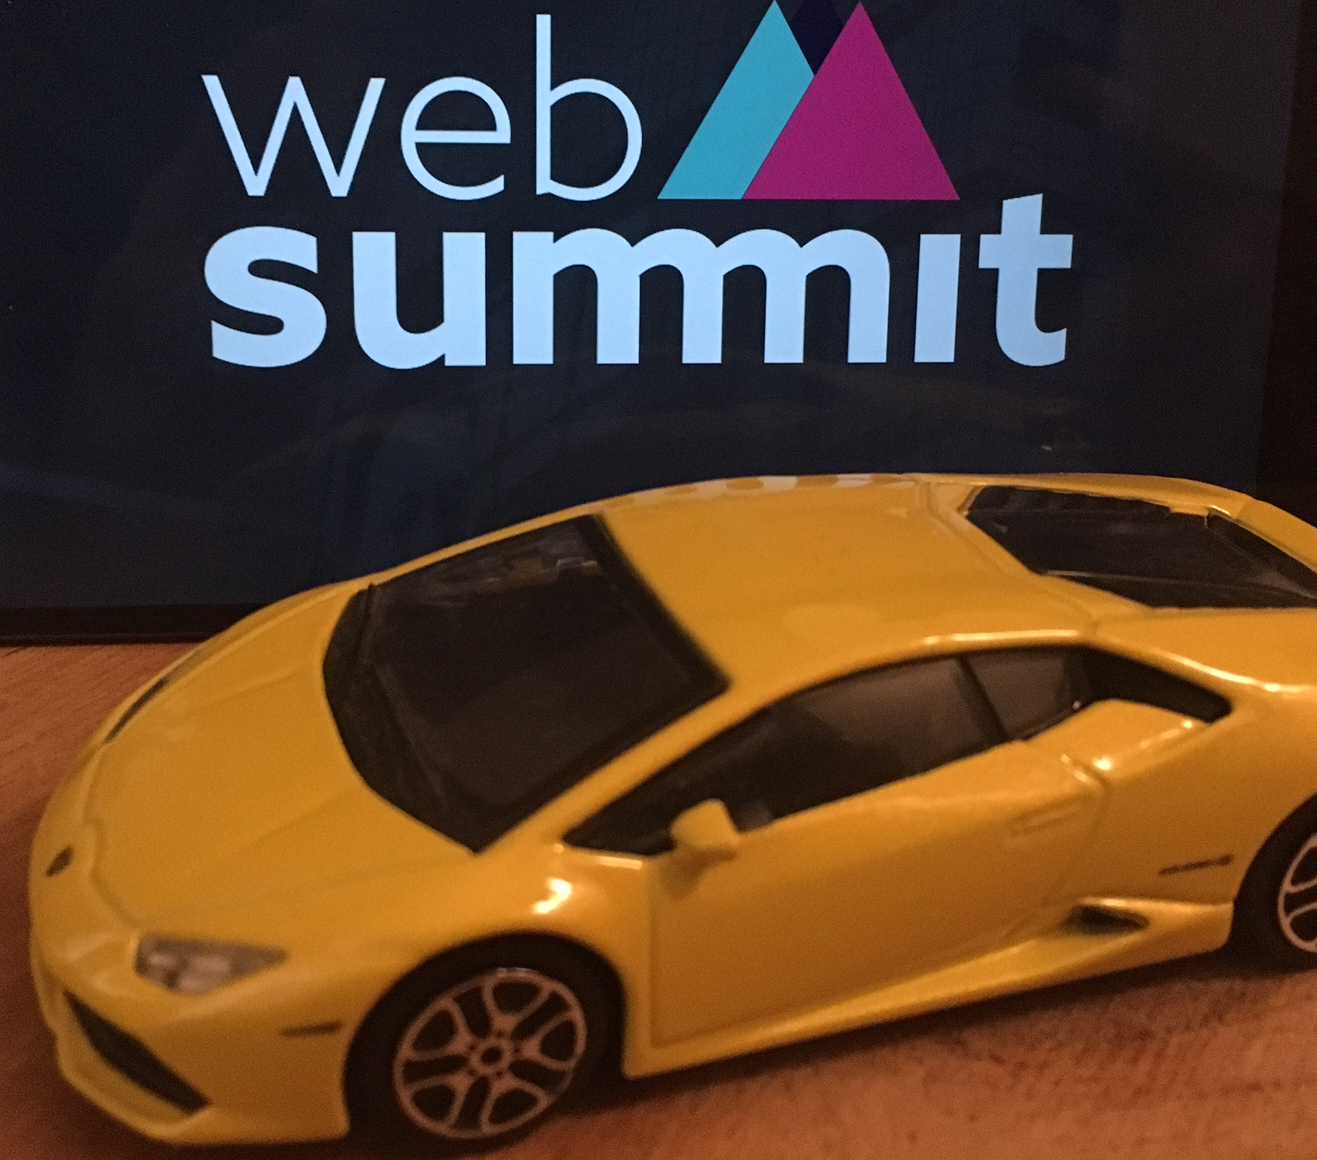 Web Summit 2016: talks, startups and tips